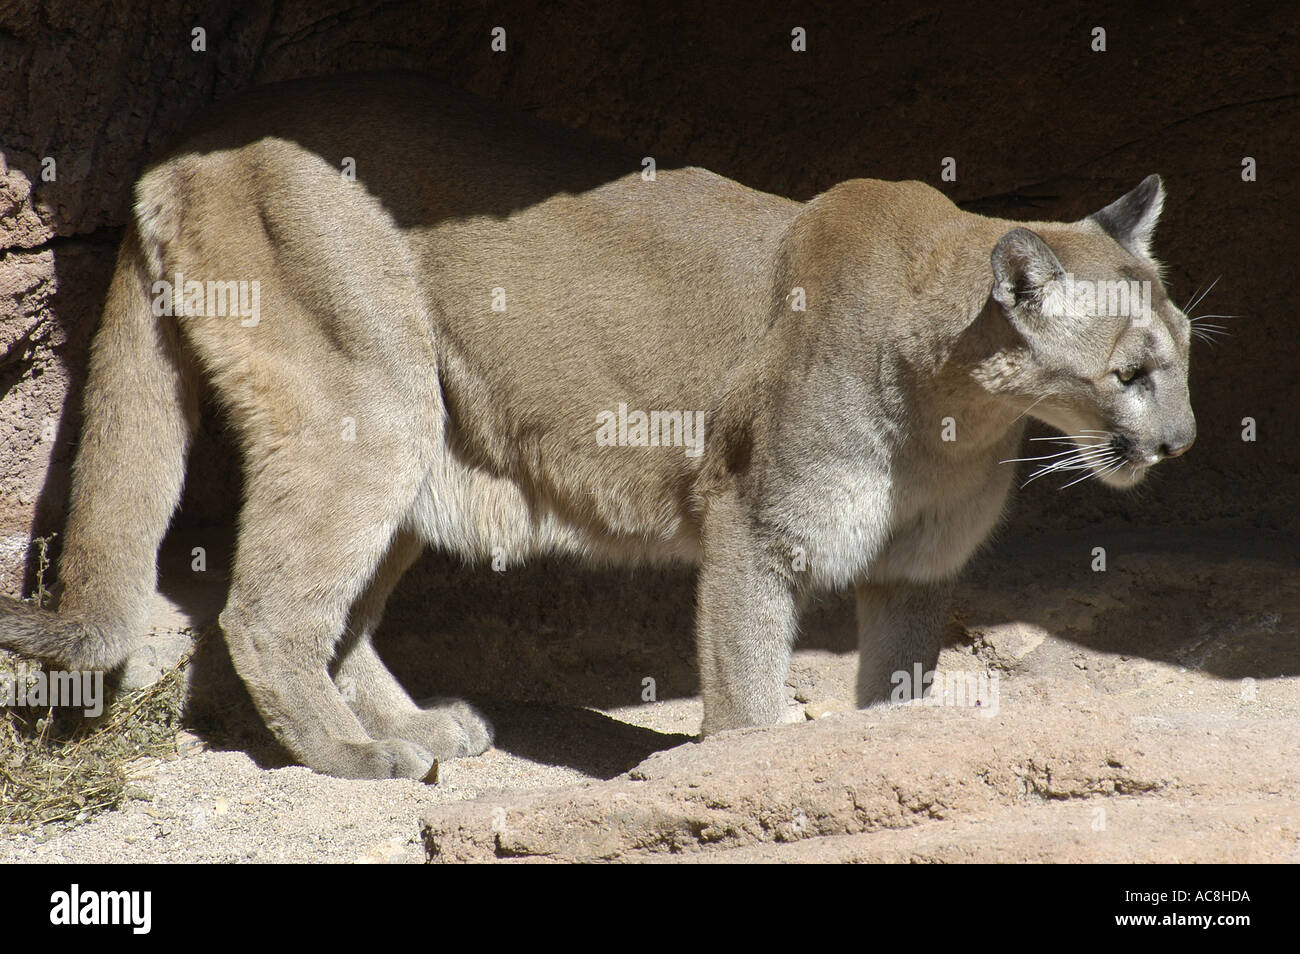 Puma Puma concolor or felis concolor Also Mountain Lion or Cougar Saguaro  National Park Sonoran Uplands Desert Scrub Habit Stock Photo - Alamy